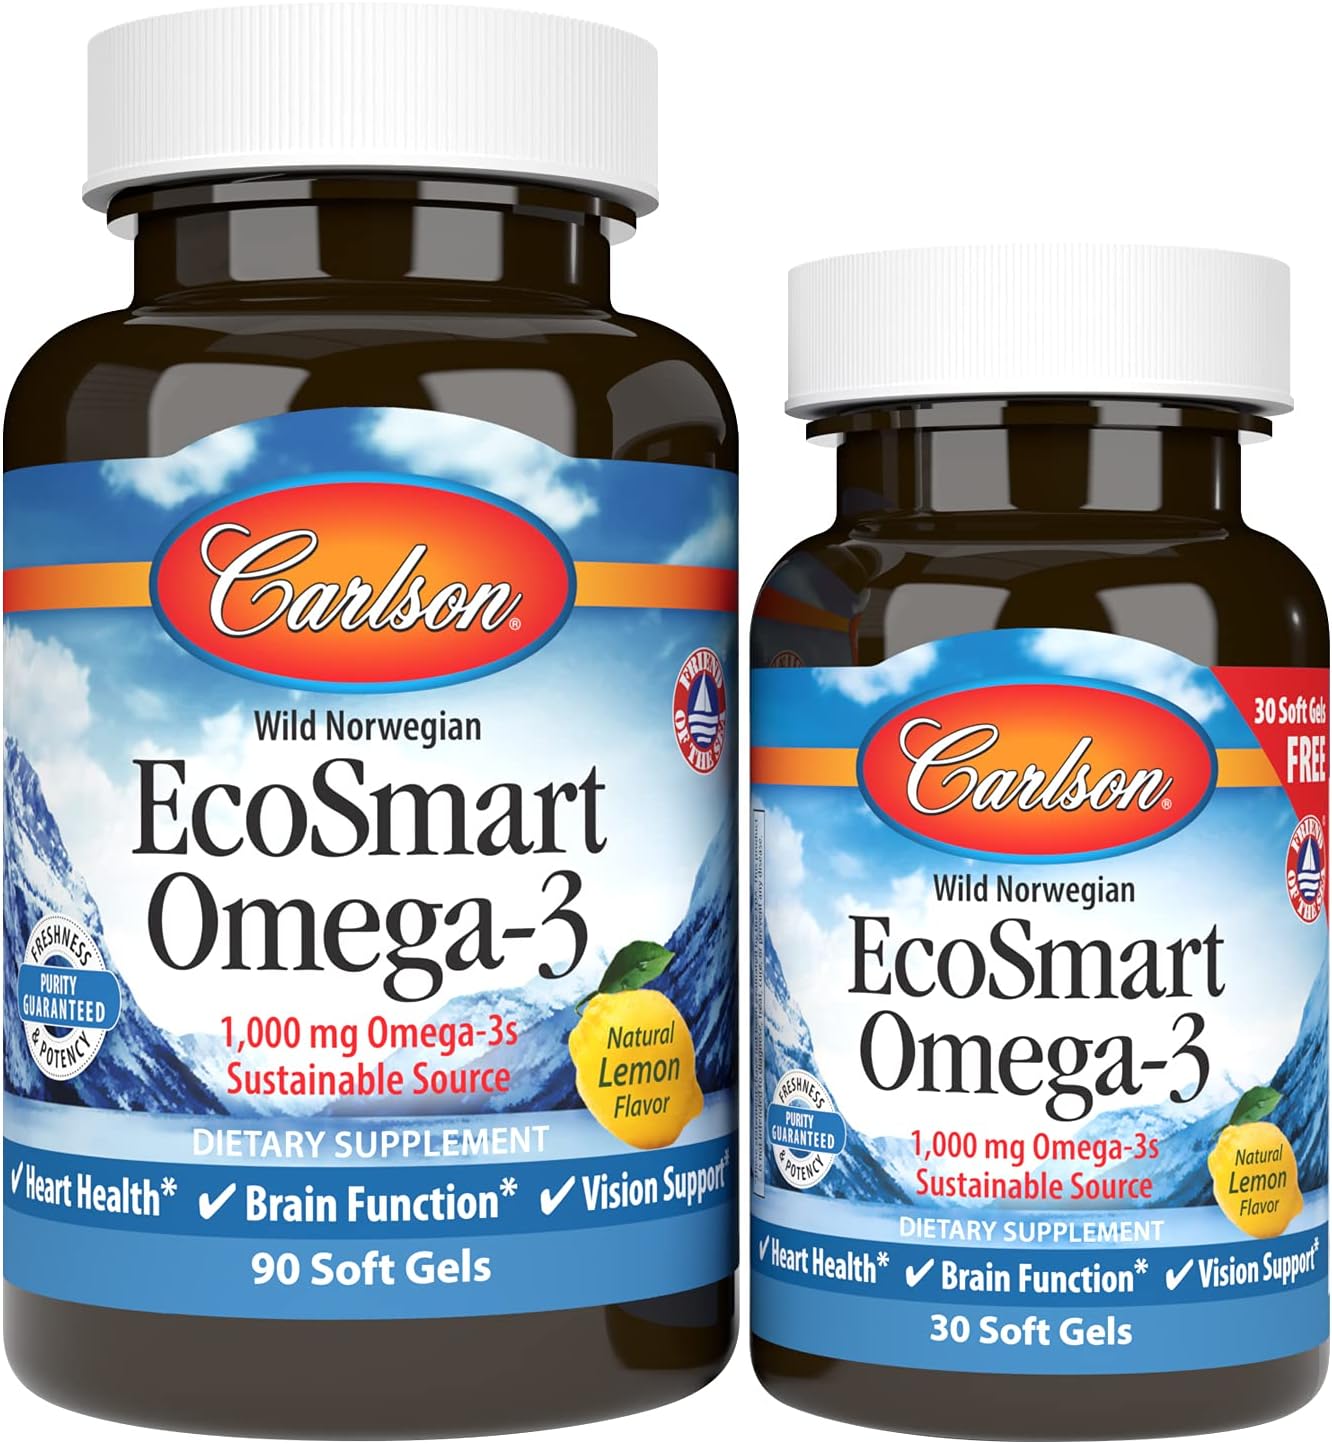 Carlson - EcoSmart Omega-3, 1000 mg Omega-3s Sustainable Source, Heart